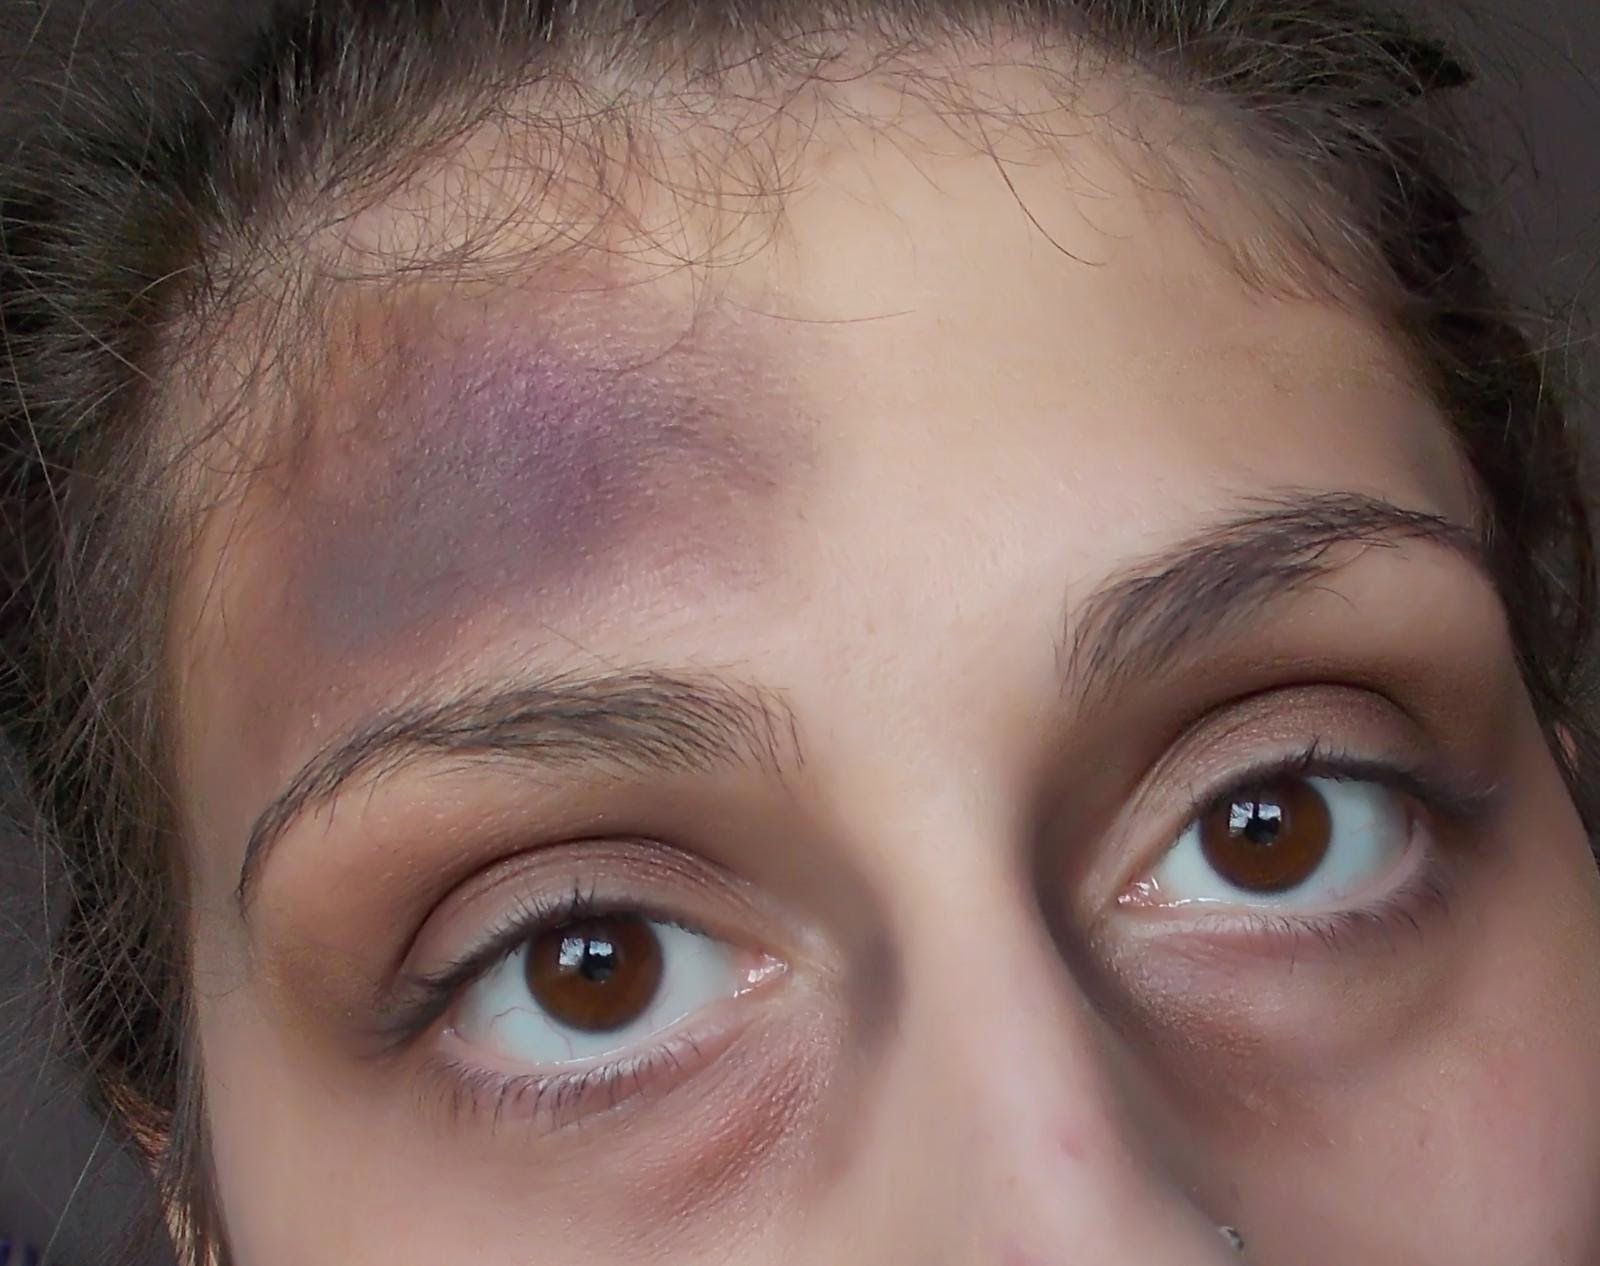 How To Make Bruises With Se Makeup - Mugeek Vidalondon